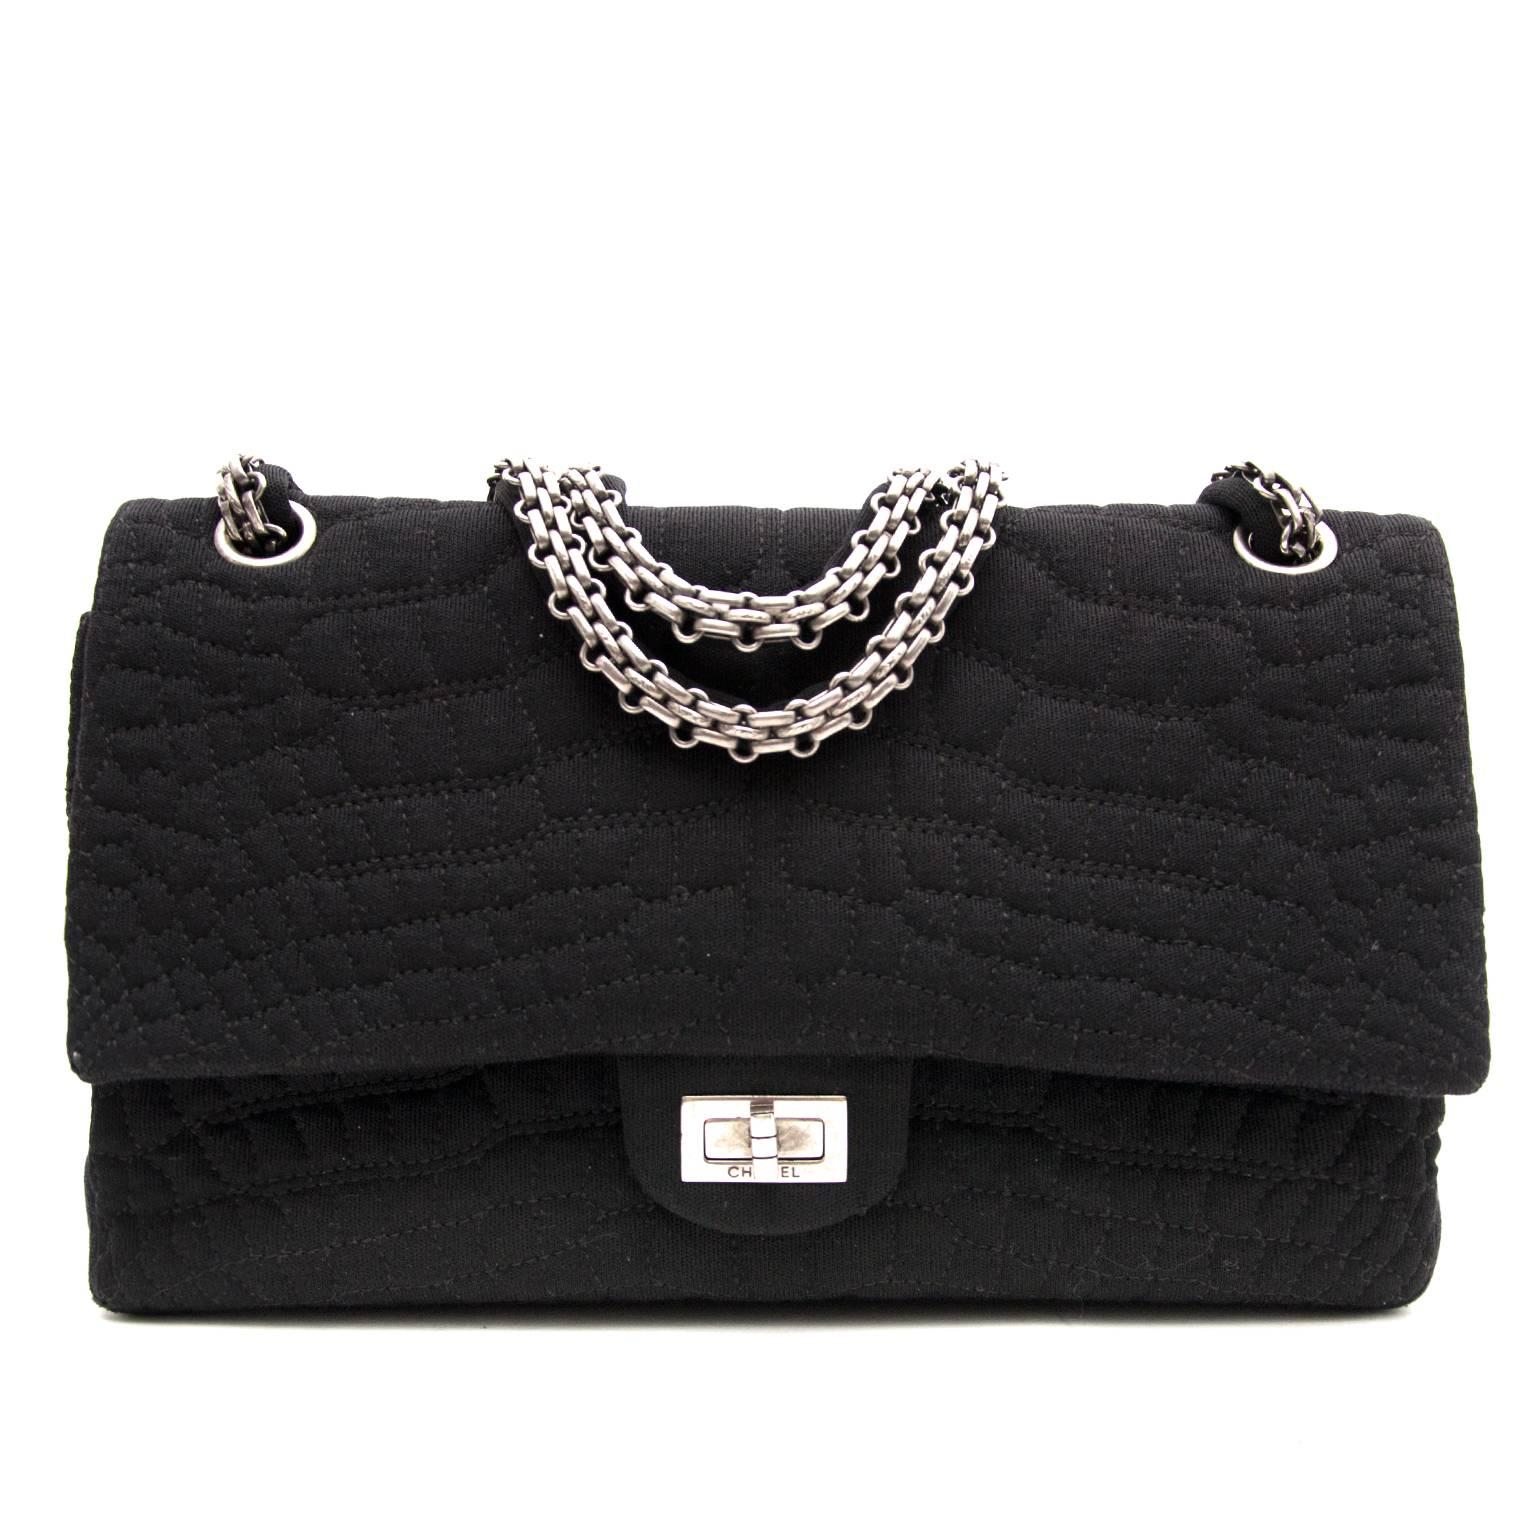 Chanel Large 2.55 Black Fabric Bag